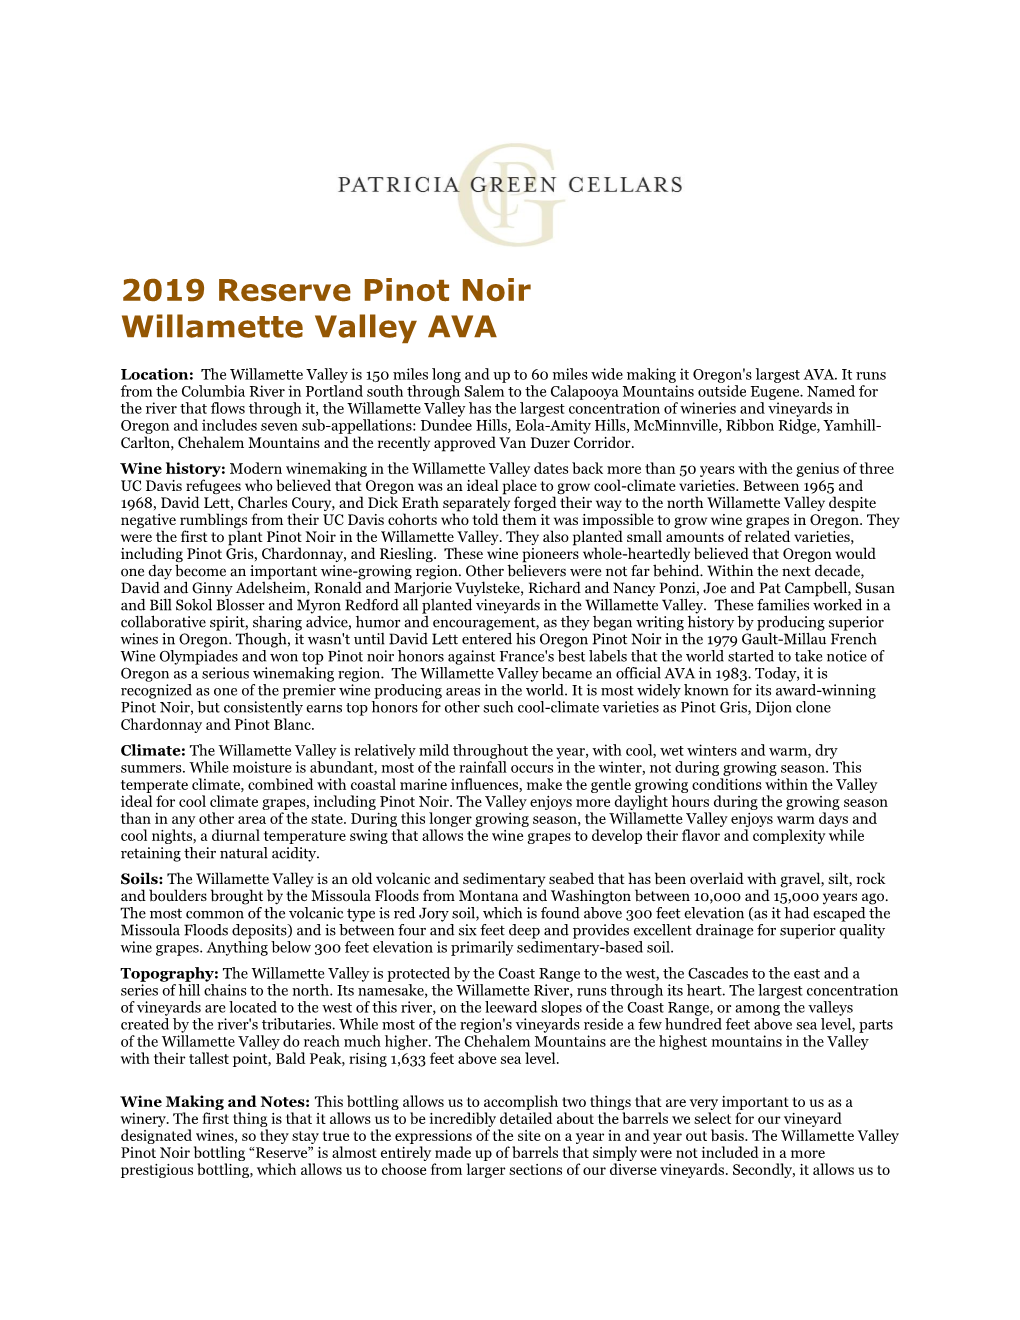 2019 Reserve Pinot Noir Willamette Valley AVA